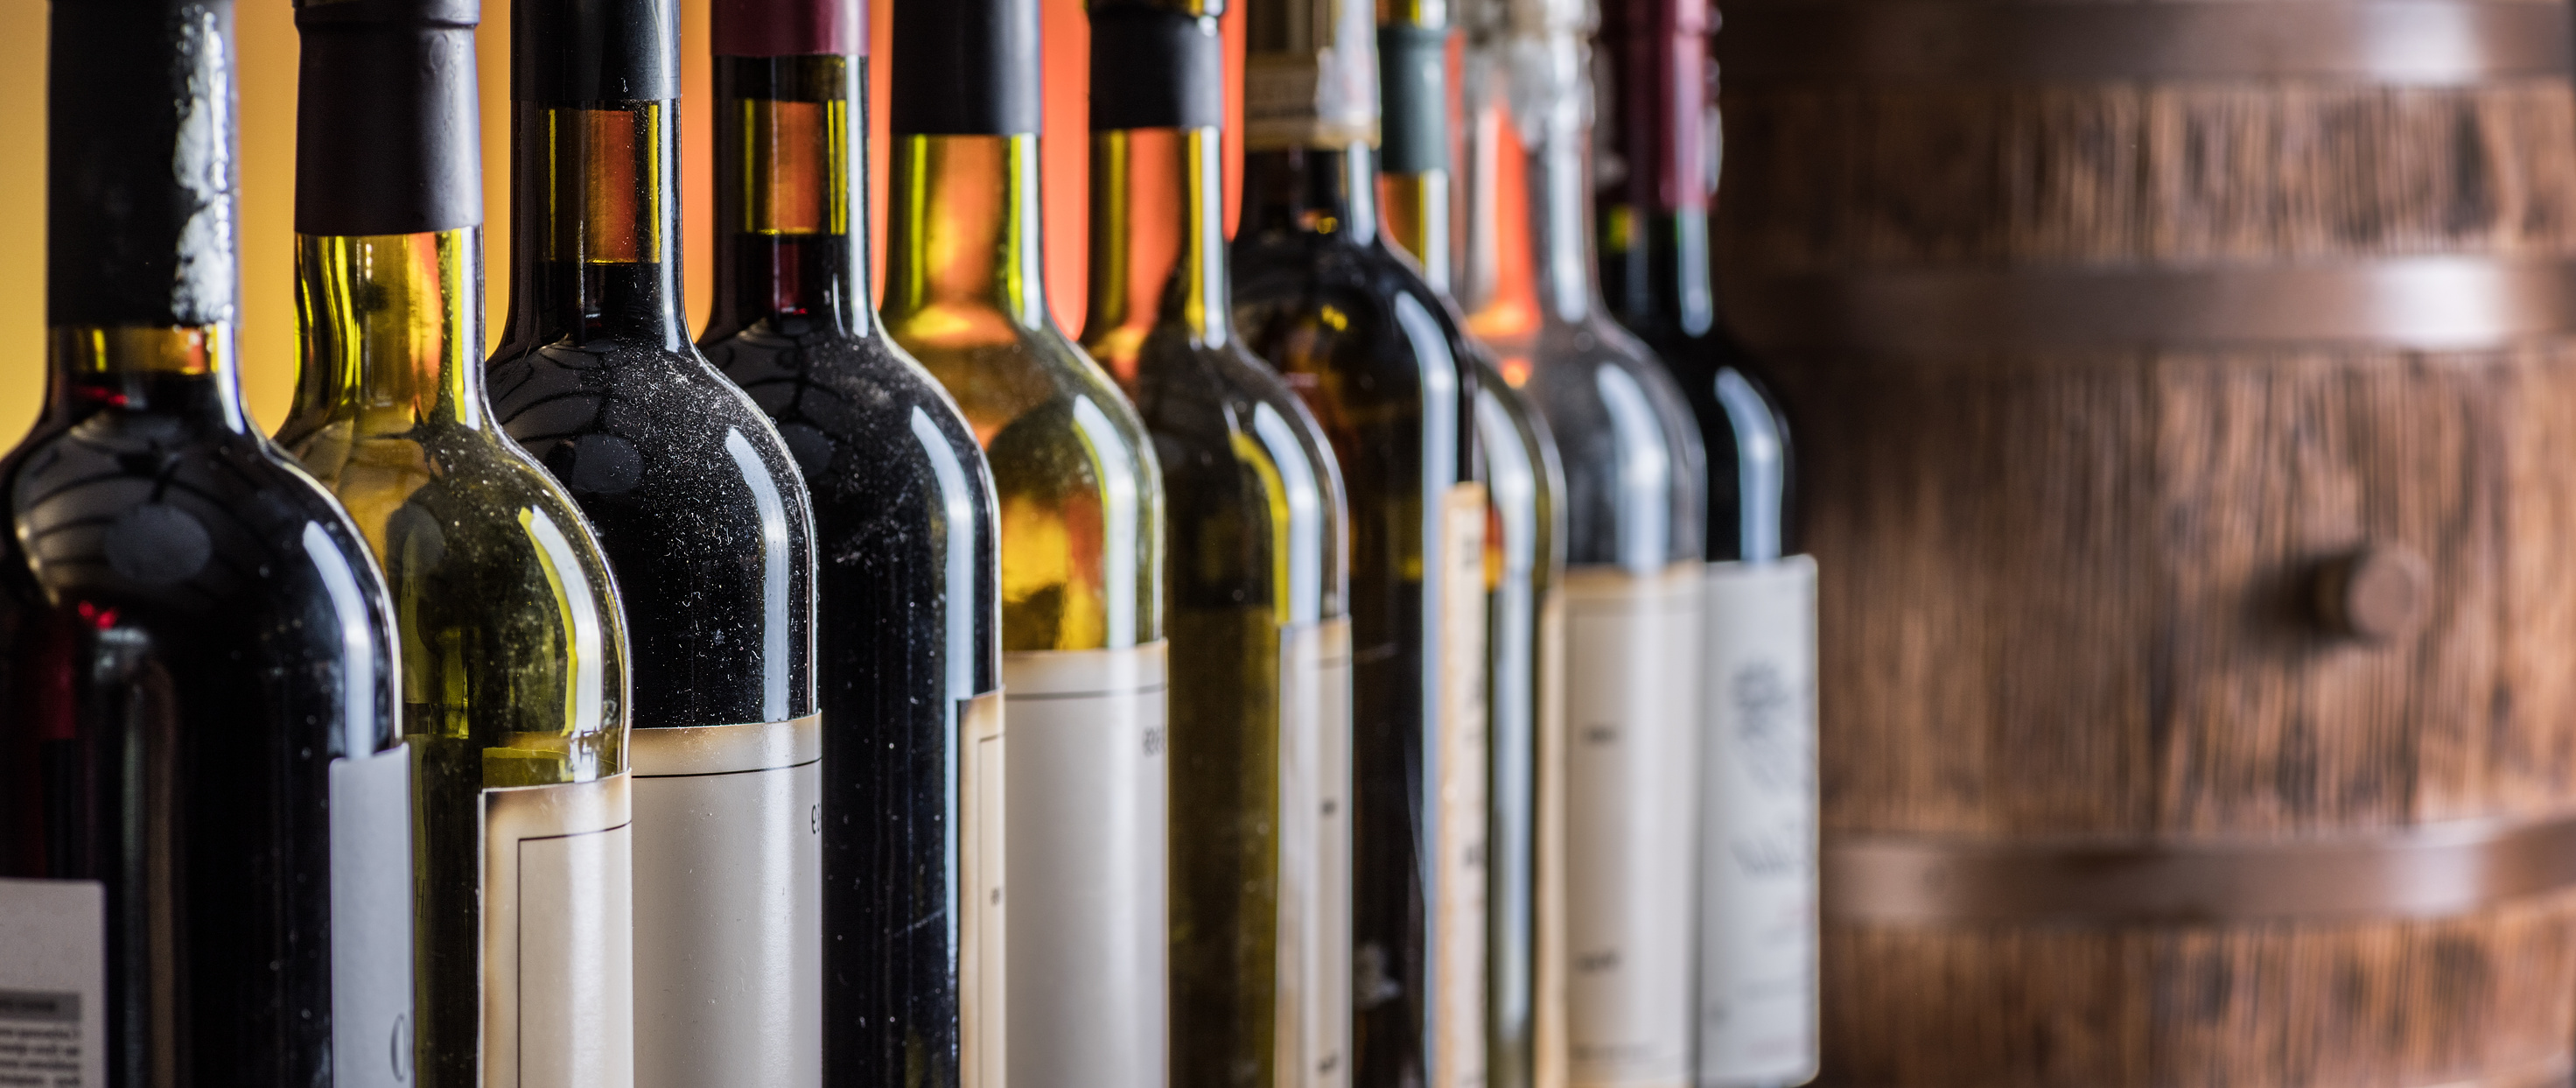 Wine bottles in row.